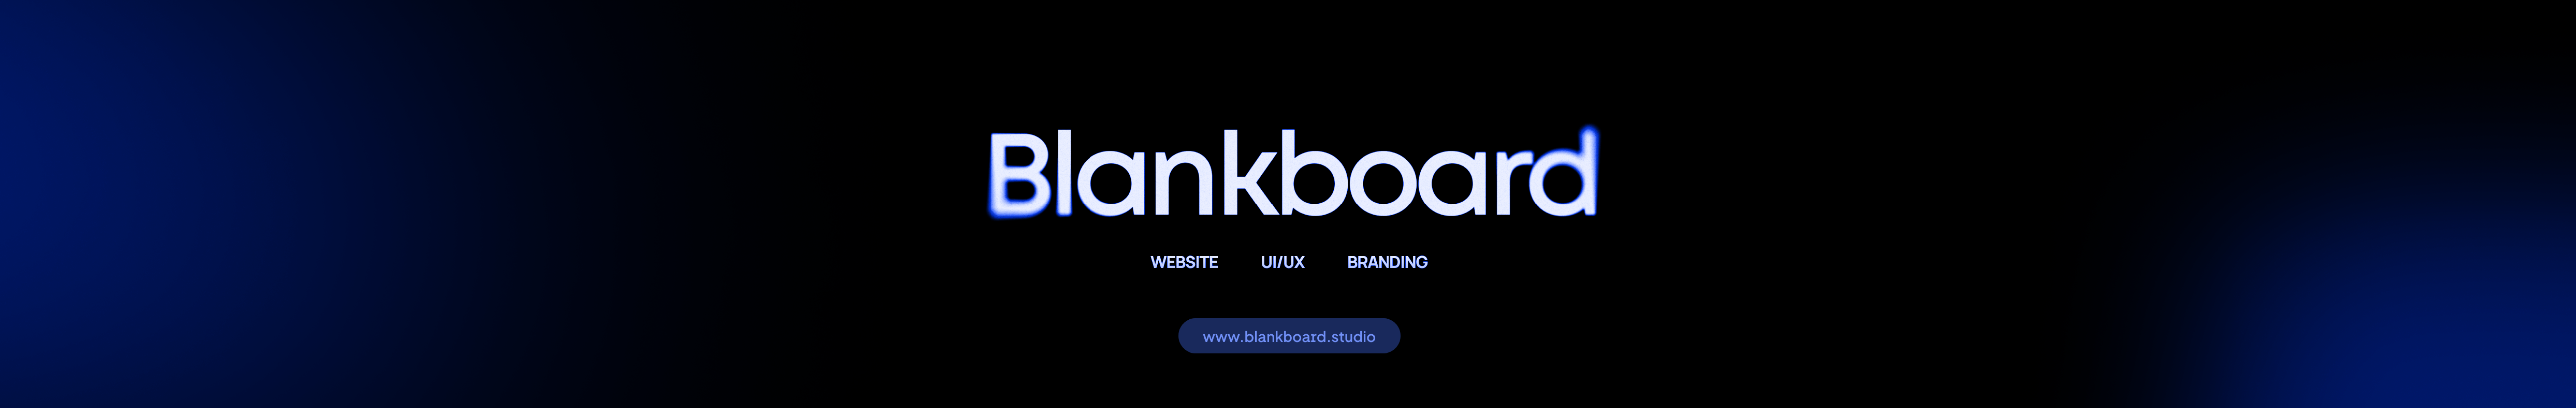 Blankboard Studio's profile banner